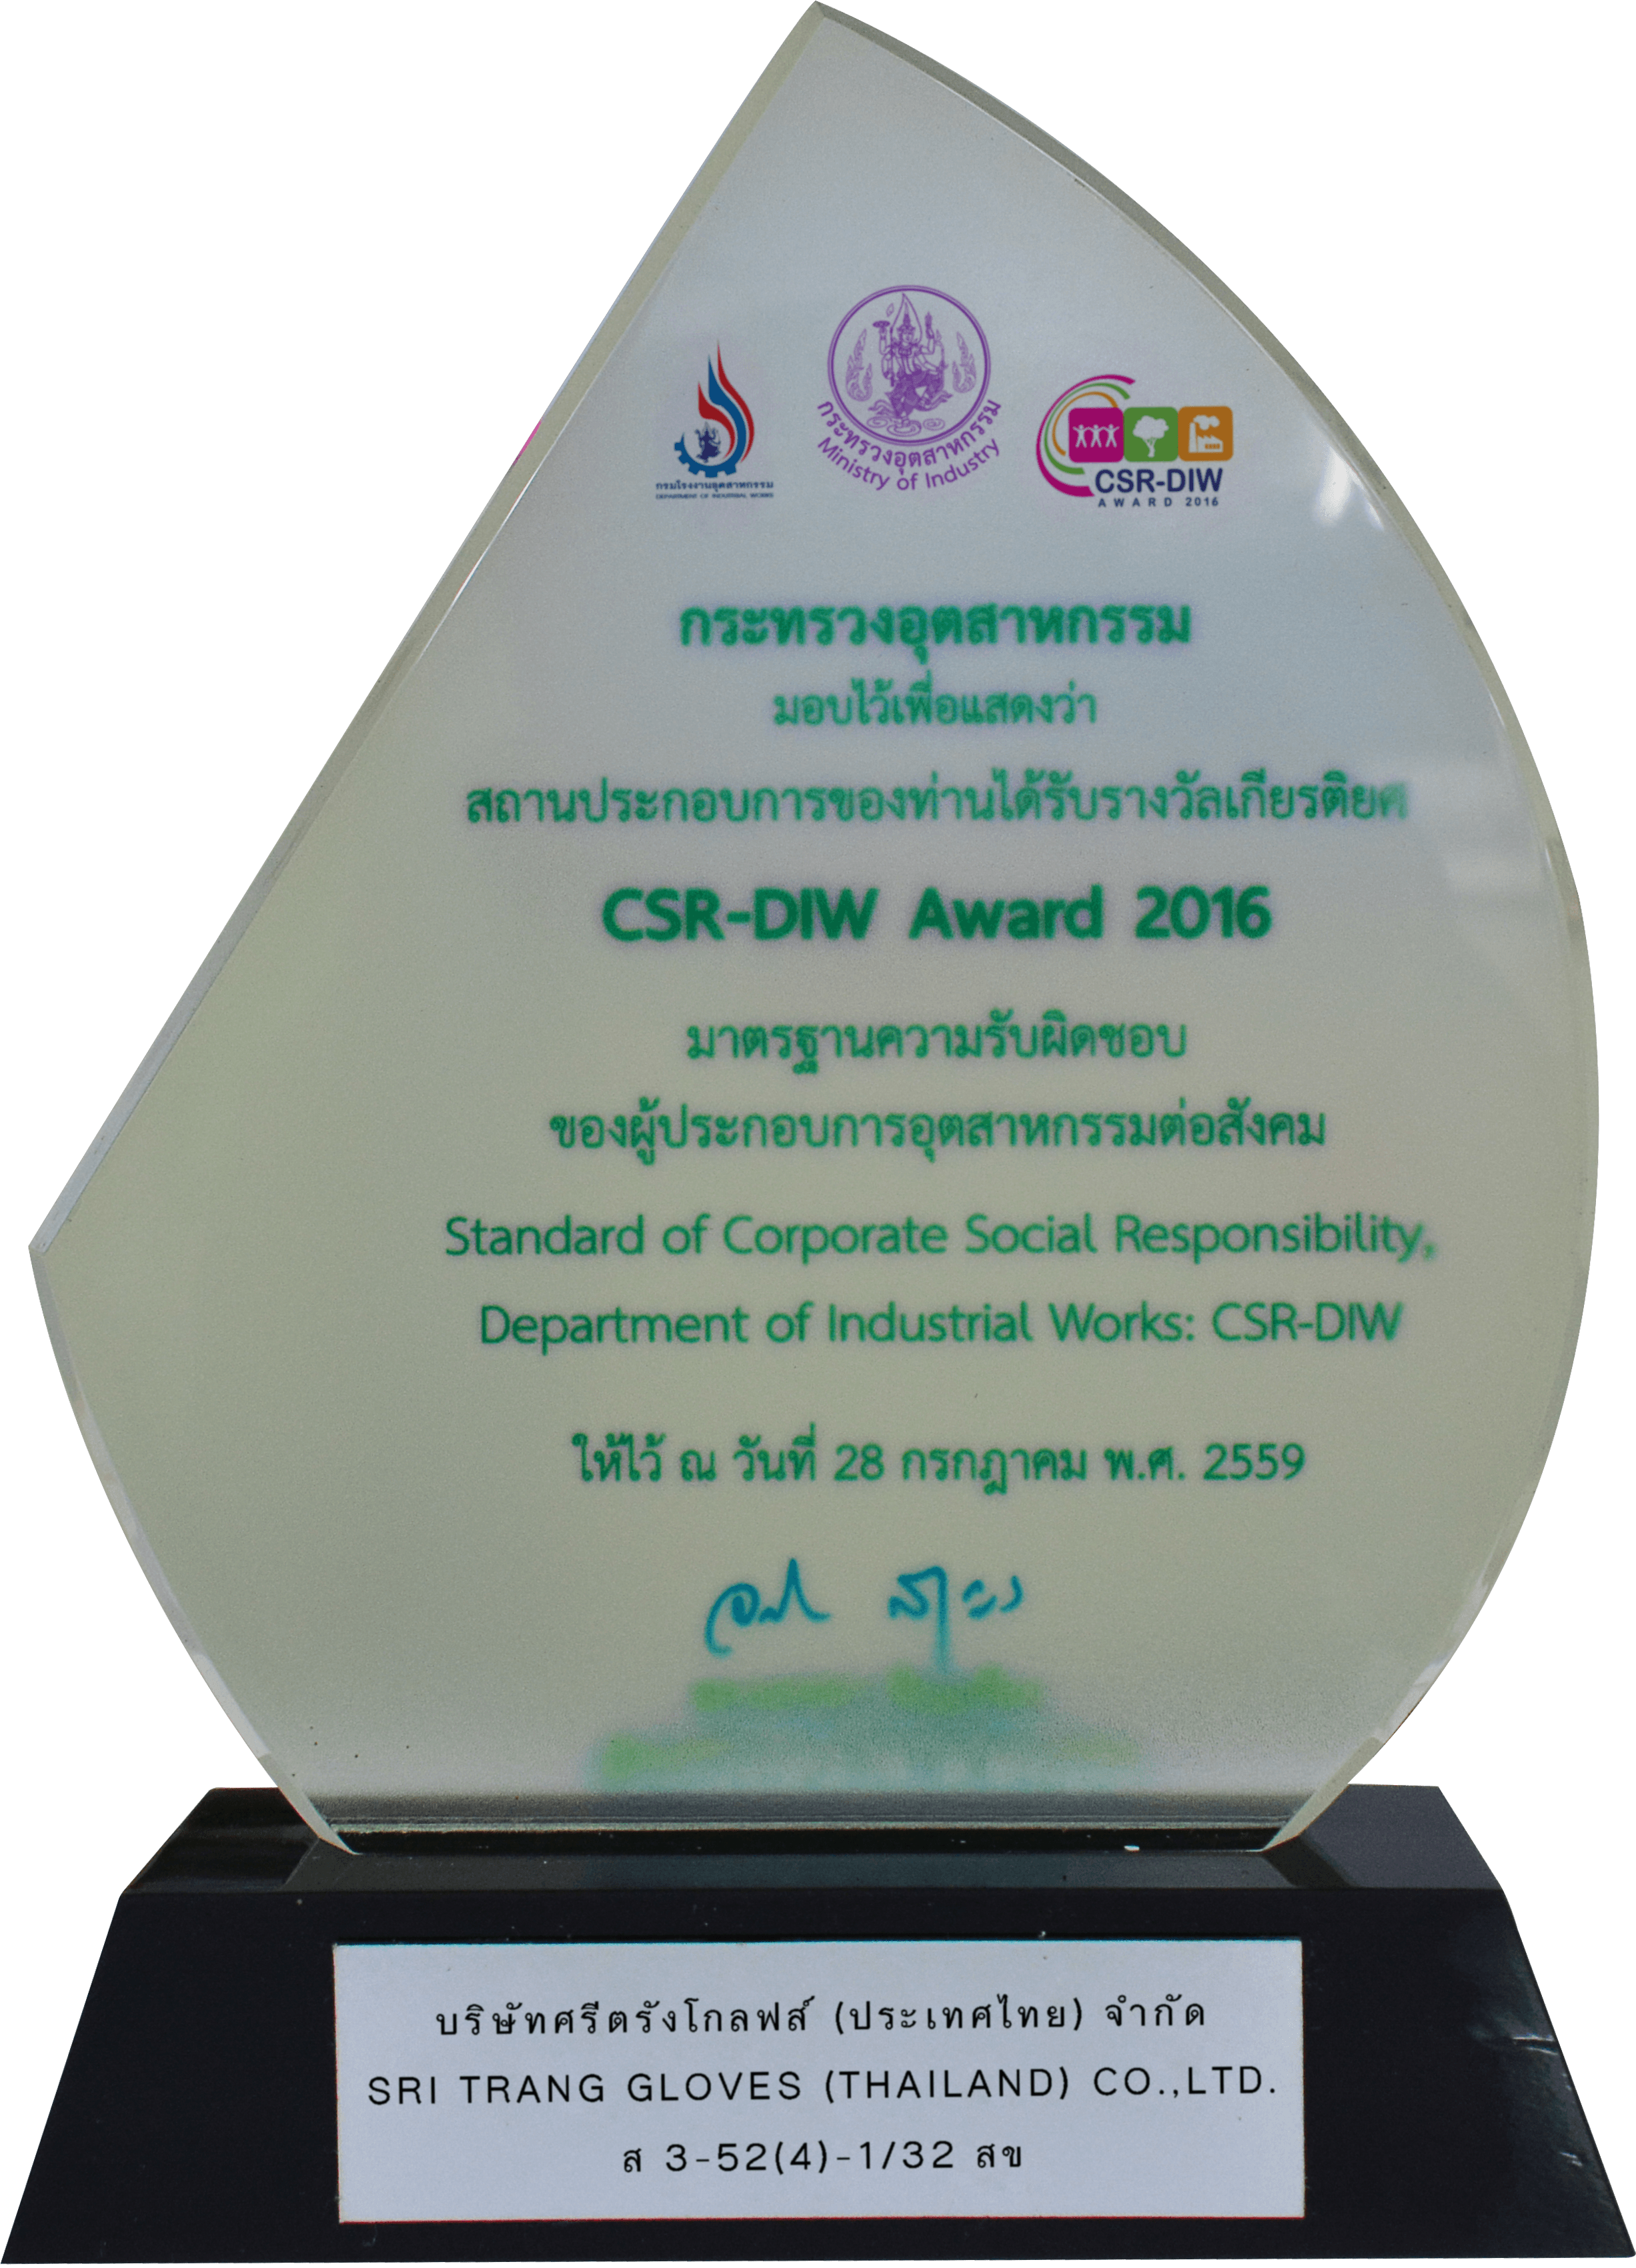 2016 CSR-DIW Award